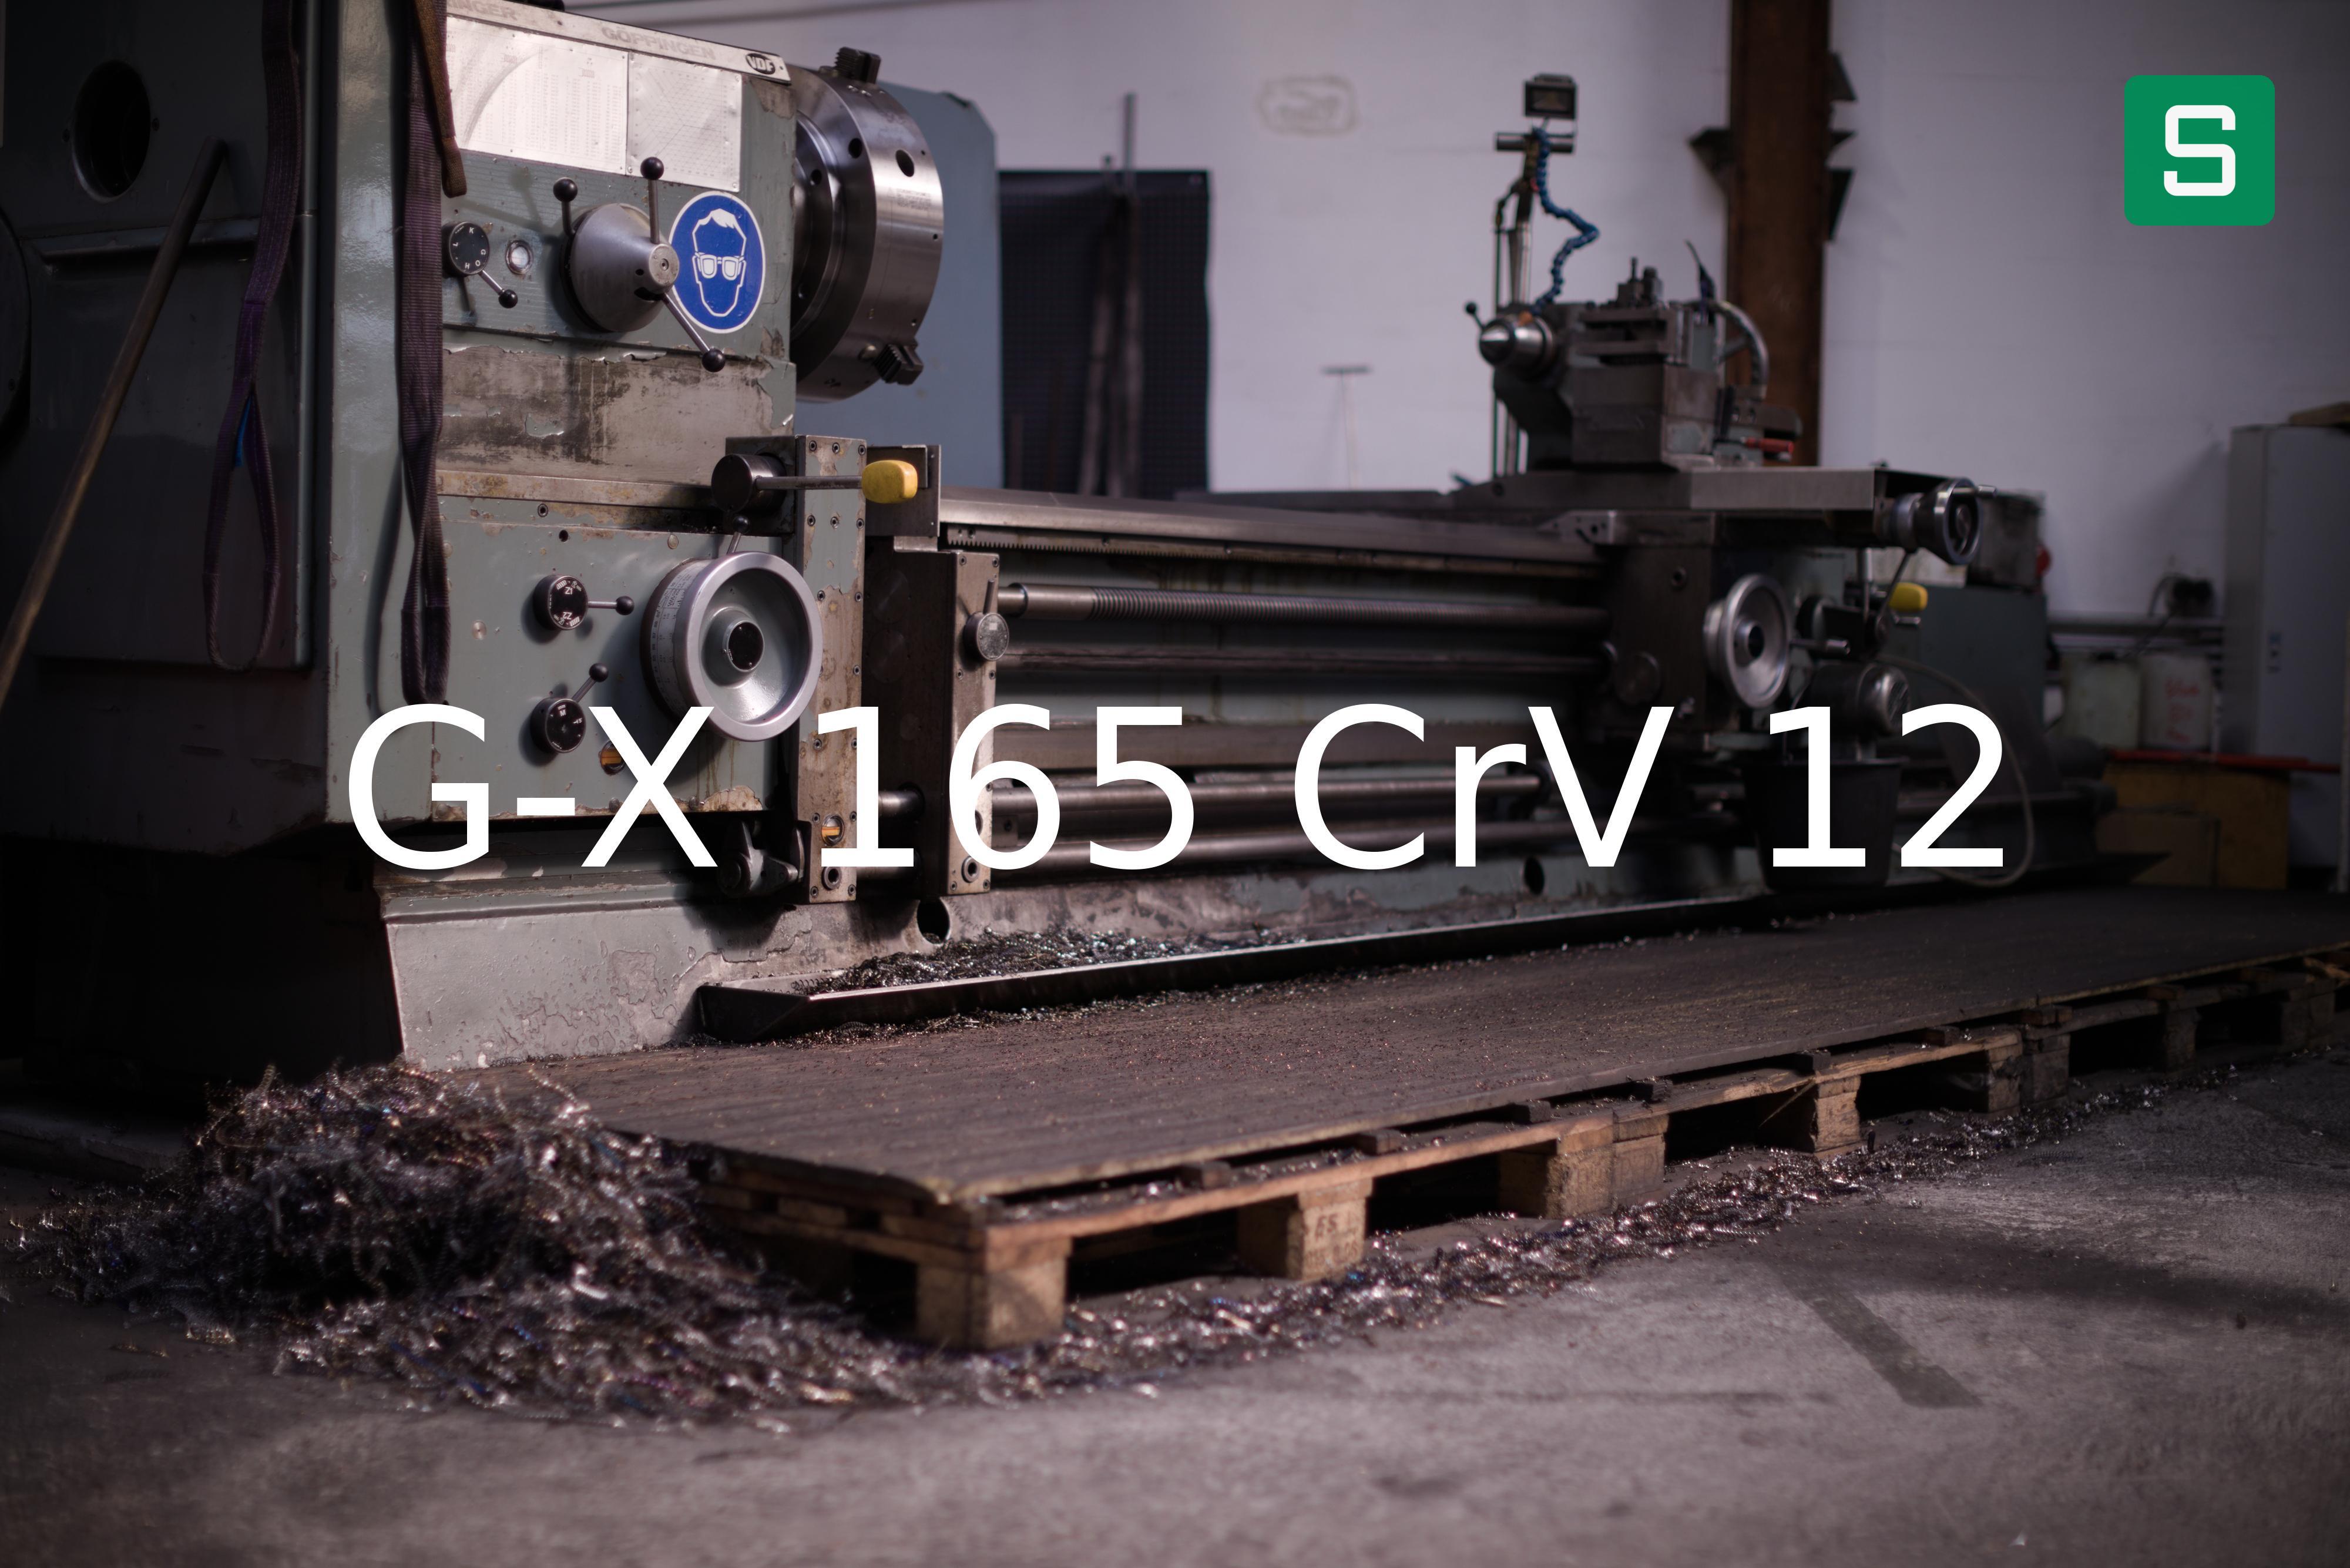 Steel Material: G-X 165 CrV 12